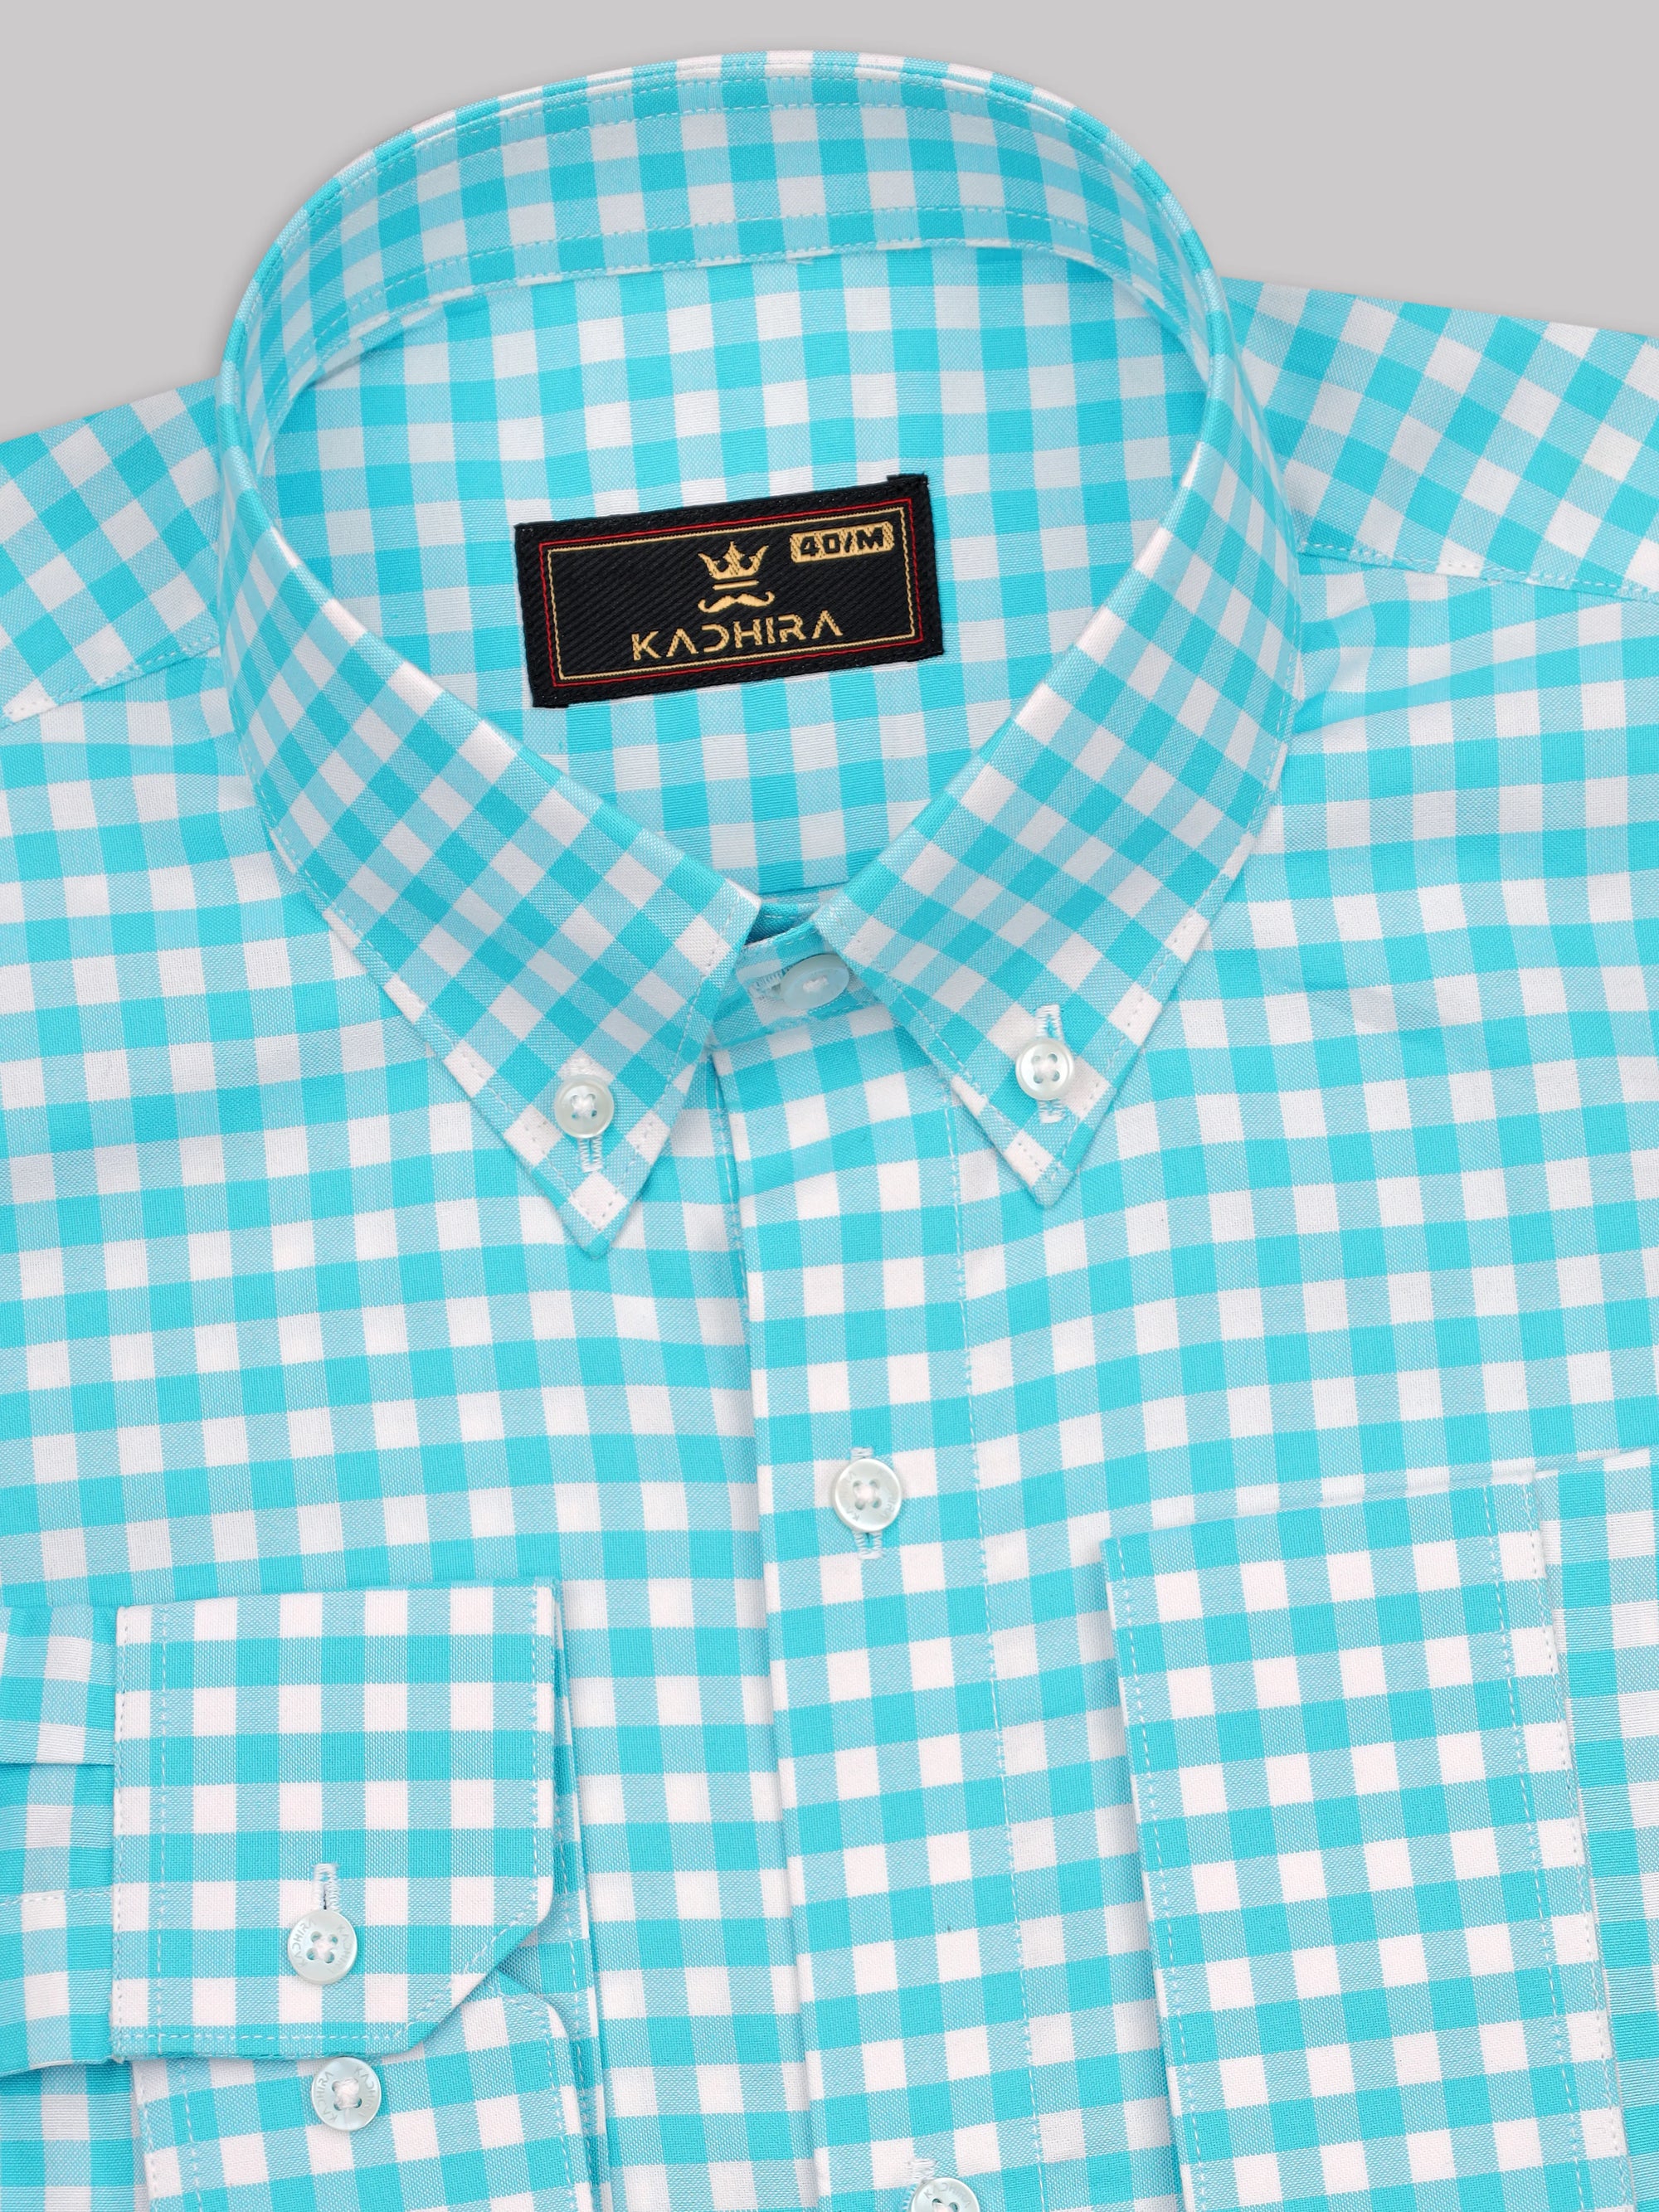 Aqua Blue With White Gingham Check Premium Cotton Shirt